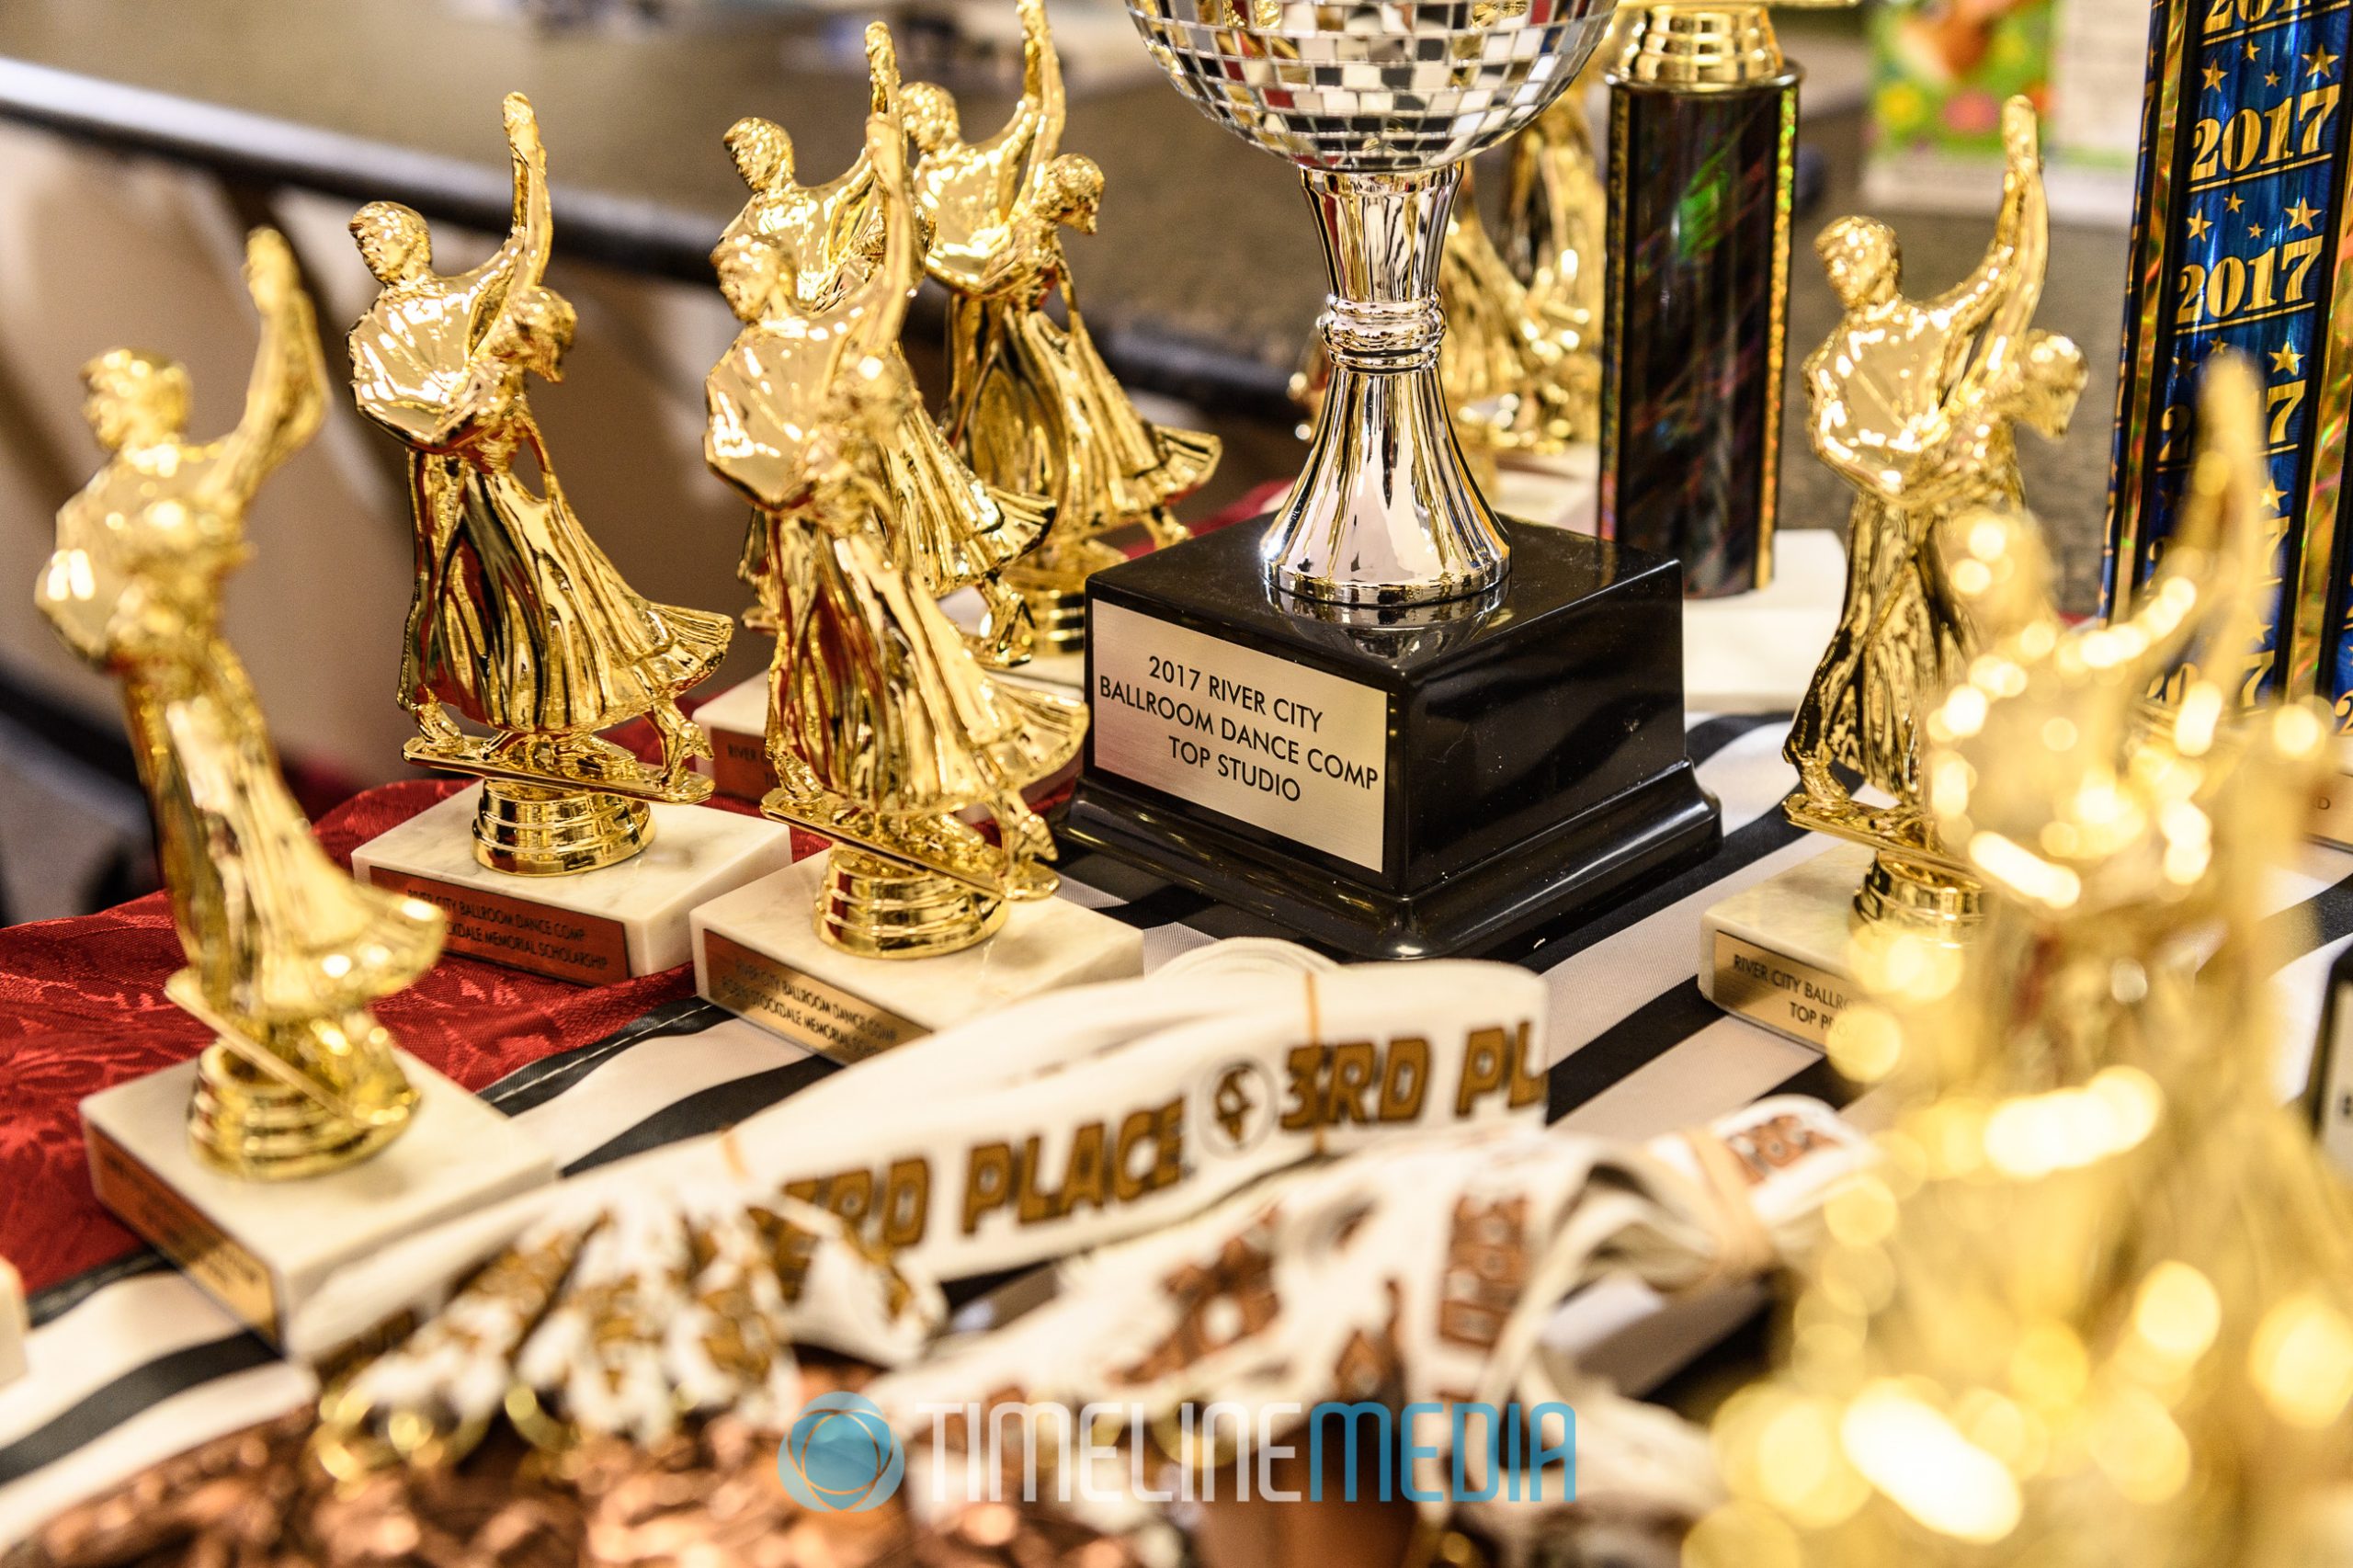 Awards at 2017 River City Ballroom Dance Competition ©TimeLine Media